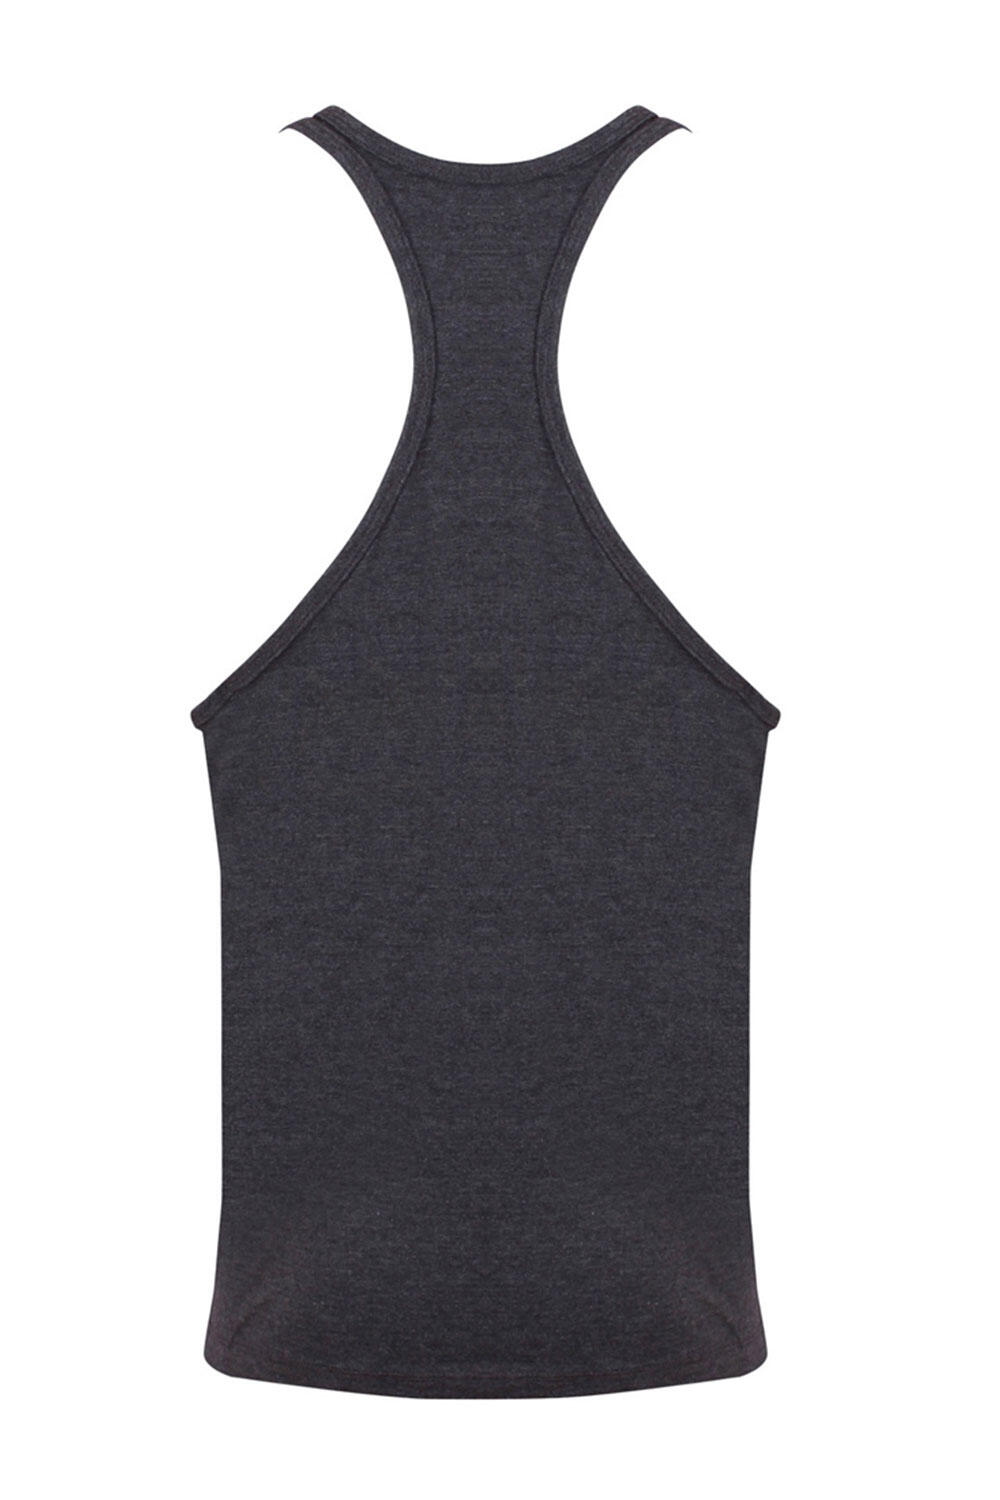 Men's Gold's Gym Muscle Joe Print Premium Stringer Vest 2/3